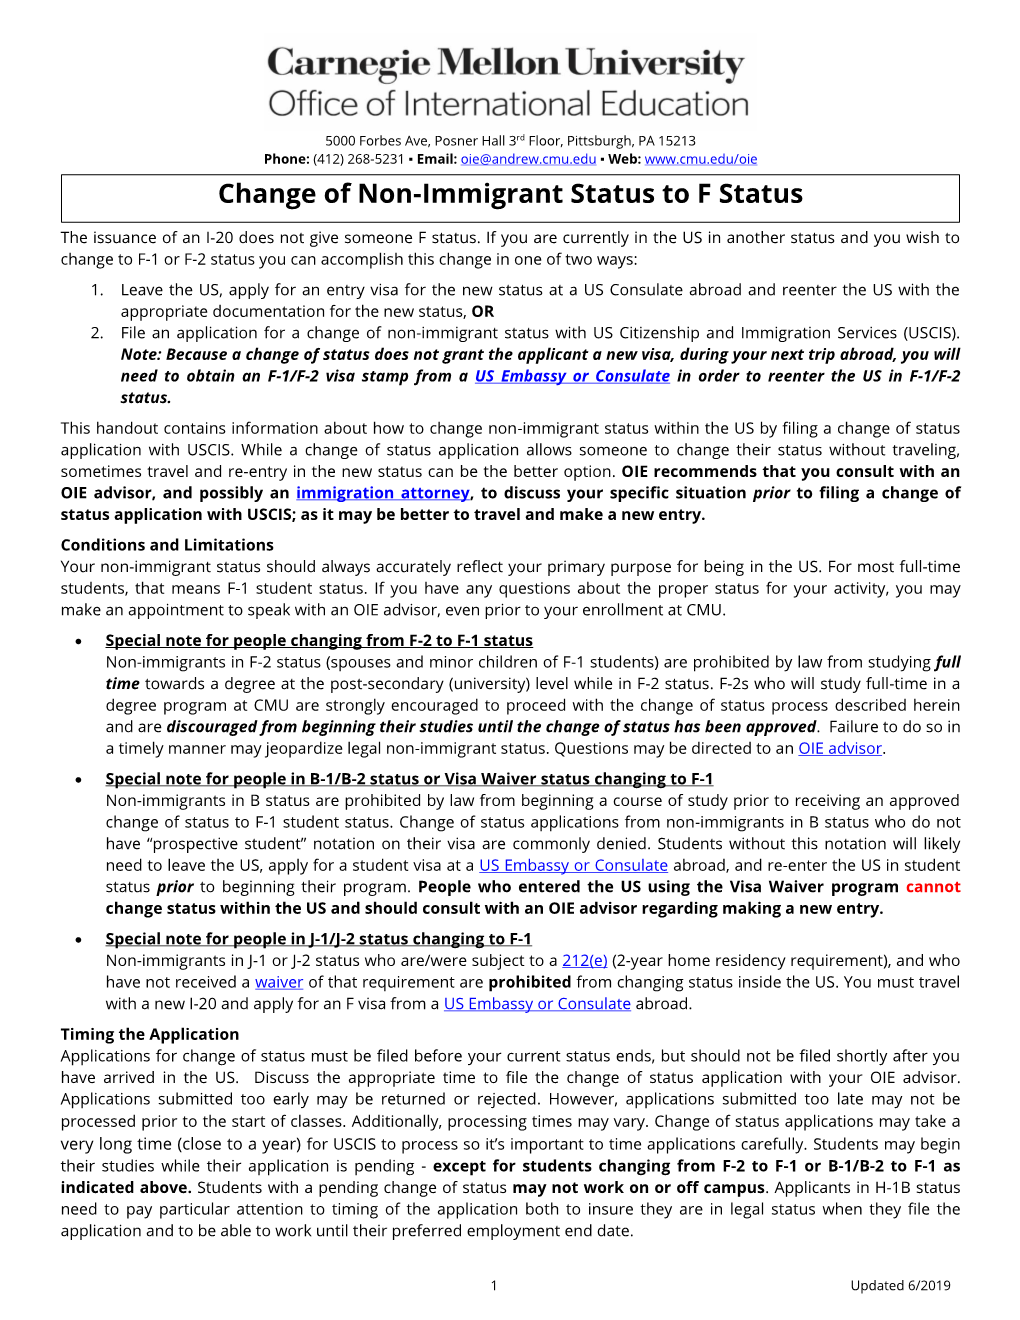 Change of Non-Immigrant Status to F Status